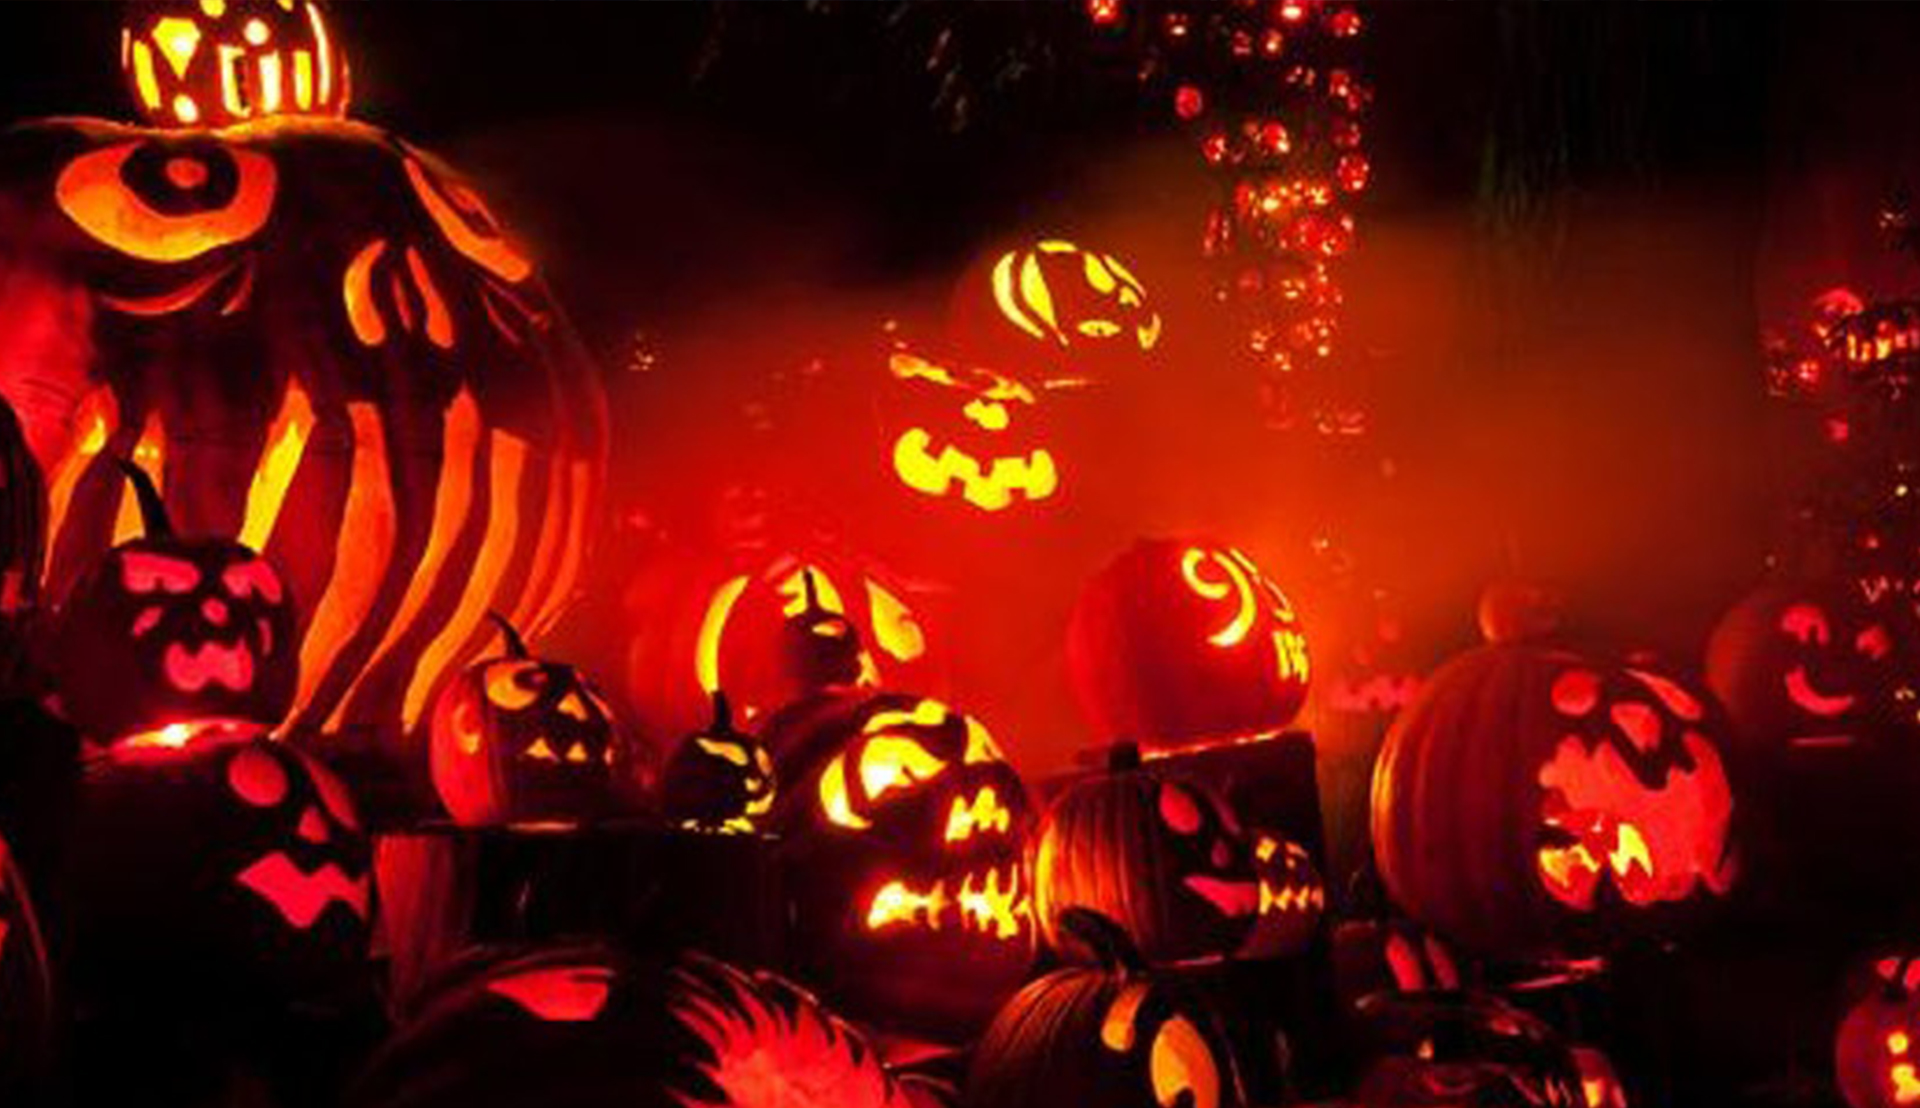 Rutgers Global-Global Ghouls Gala, series of lit Jack-o-lanterns with various carvings